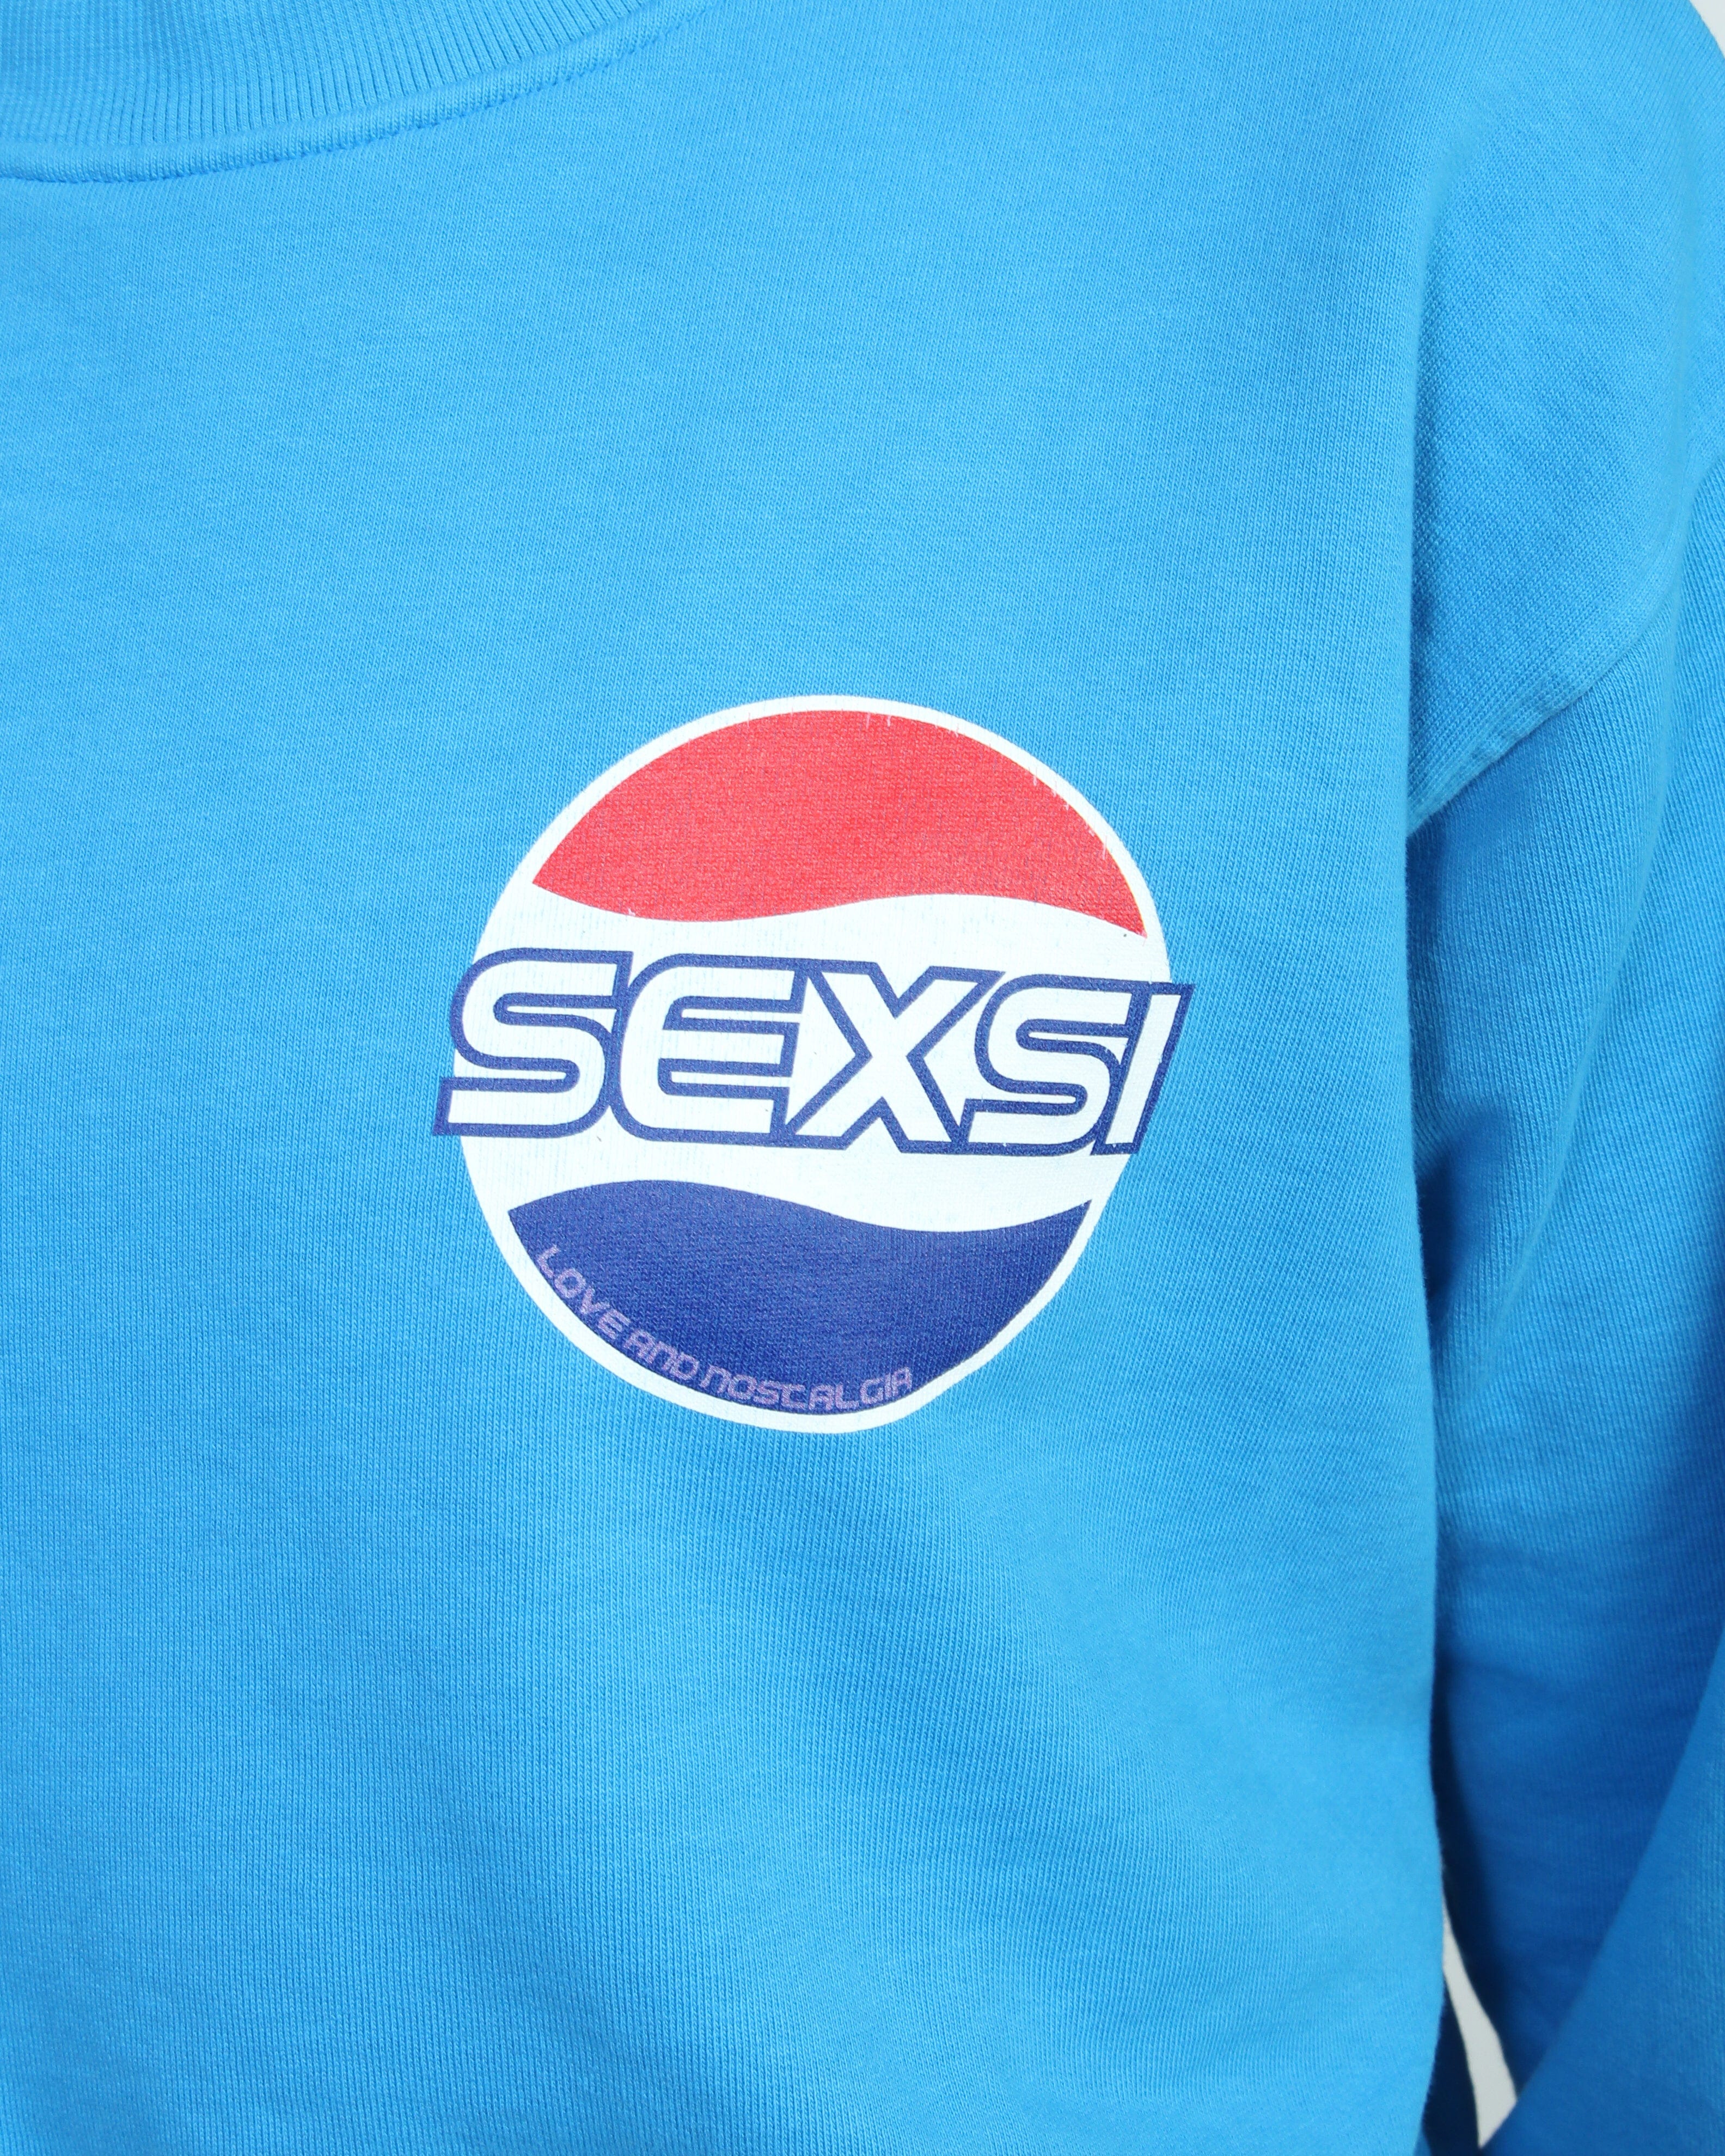 Sexsi Sweatshirt - Blue